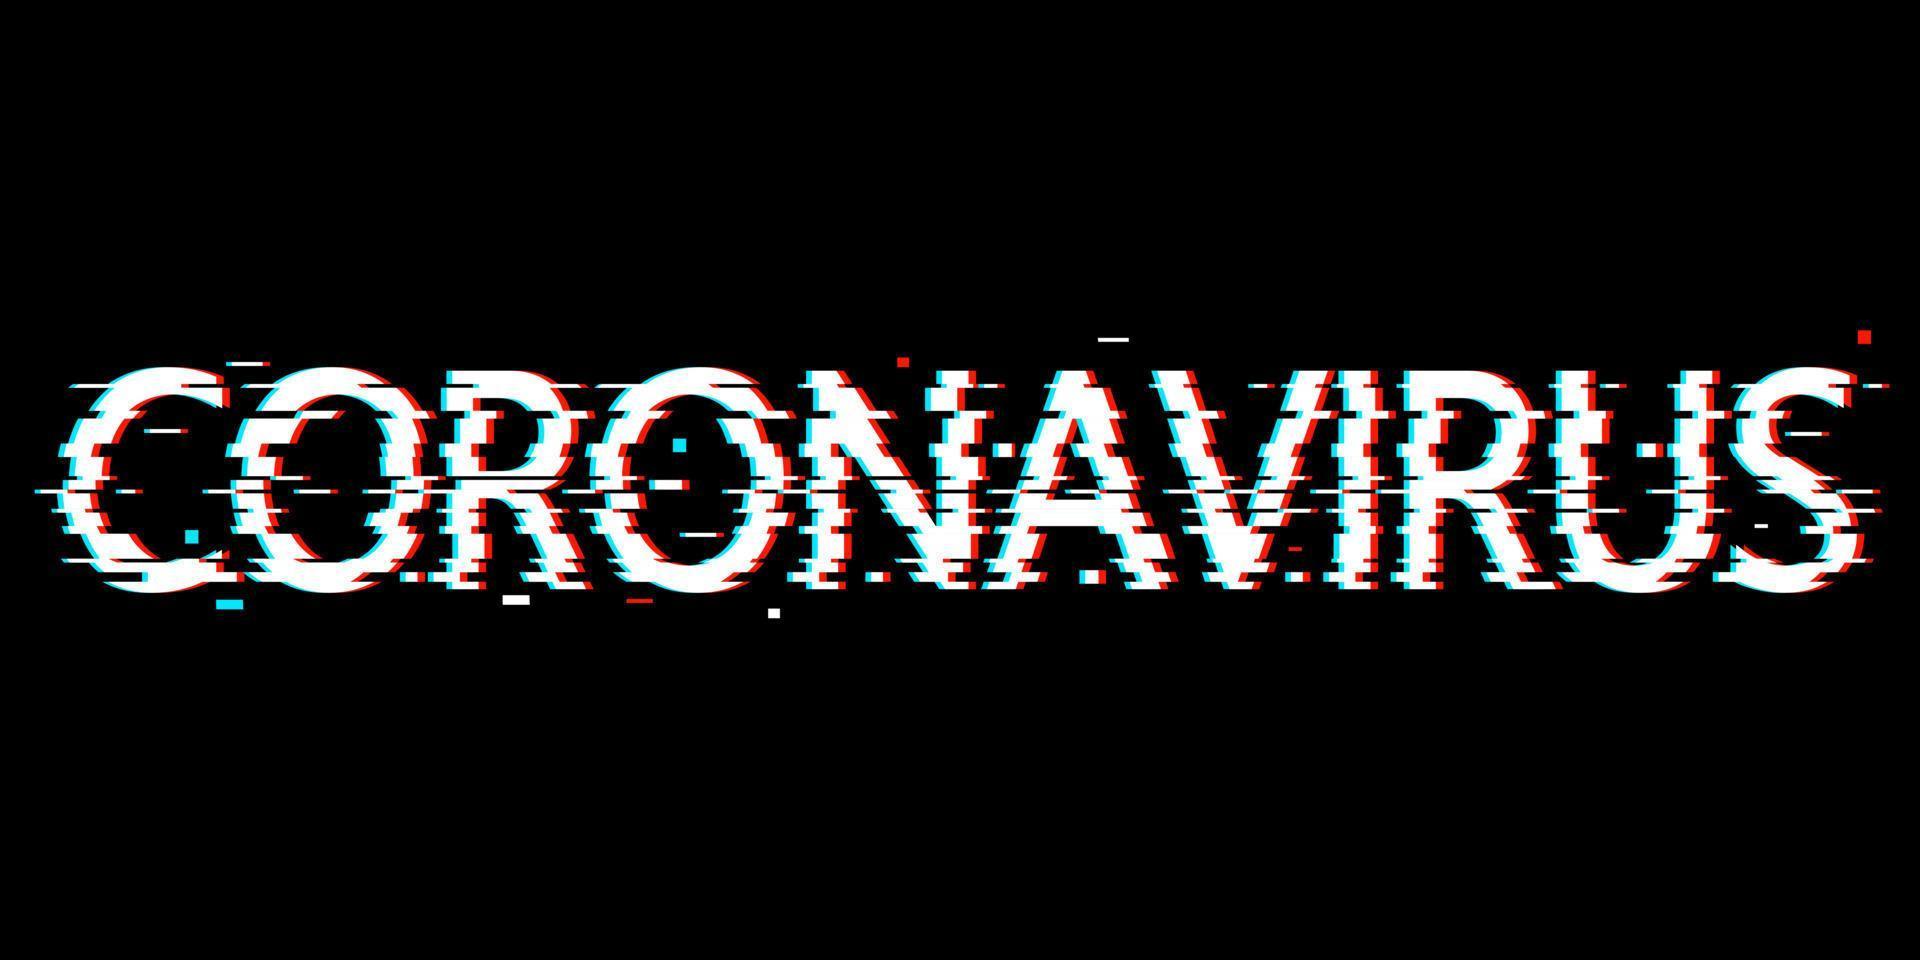 digitale glitch woord coronavirus op zwarte achtergrond. virus concept vector